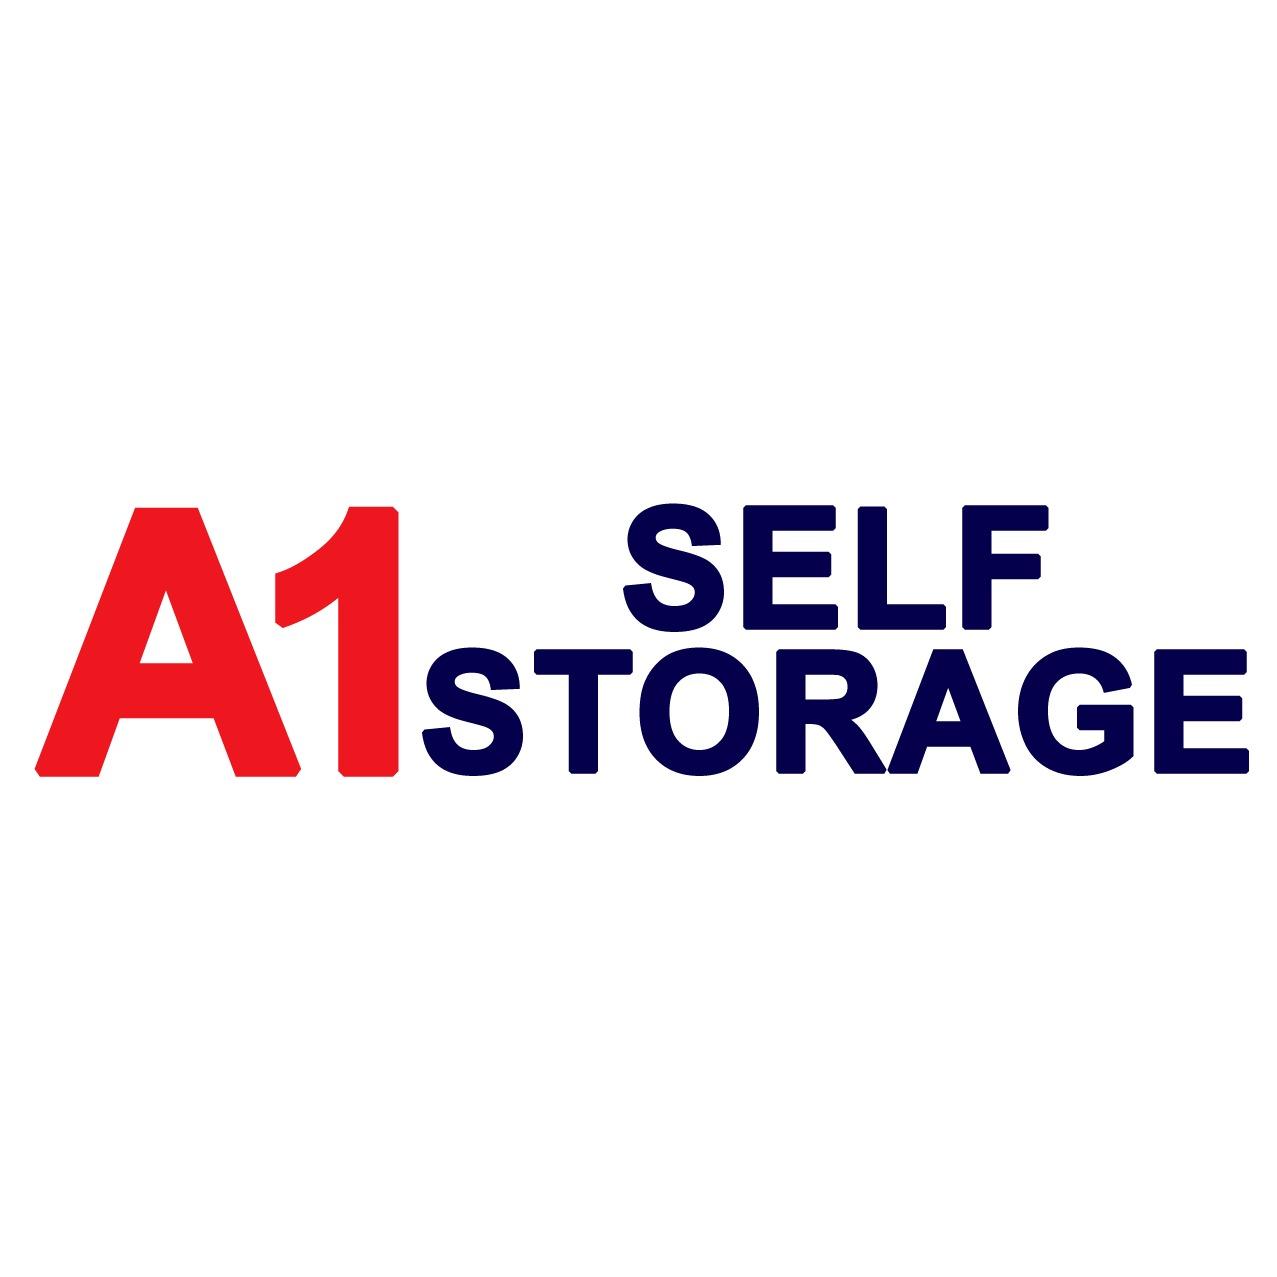 A1 Self Storage Photo